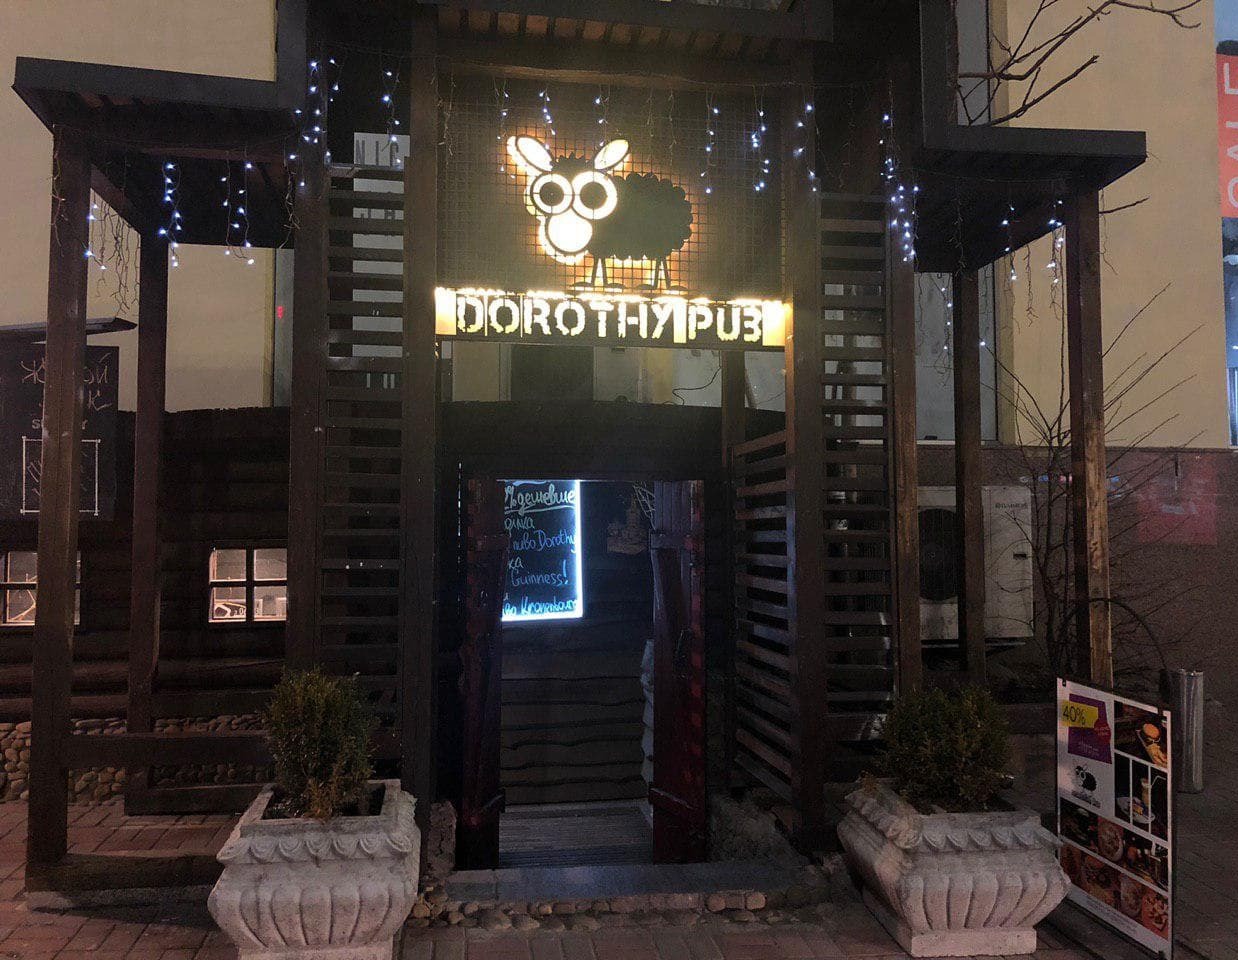 Dorothy pub